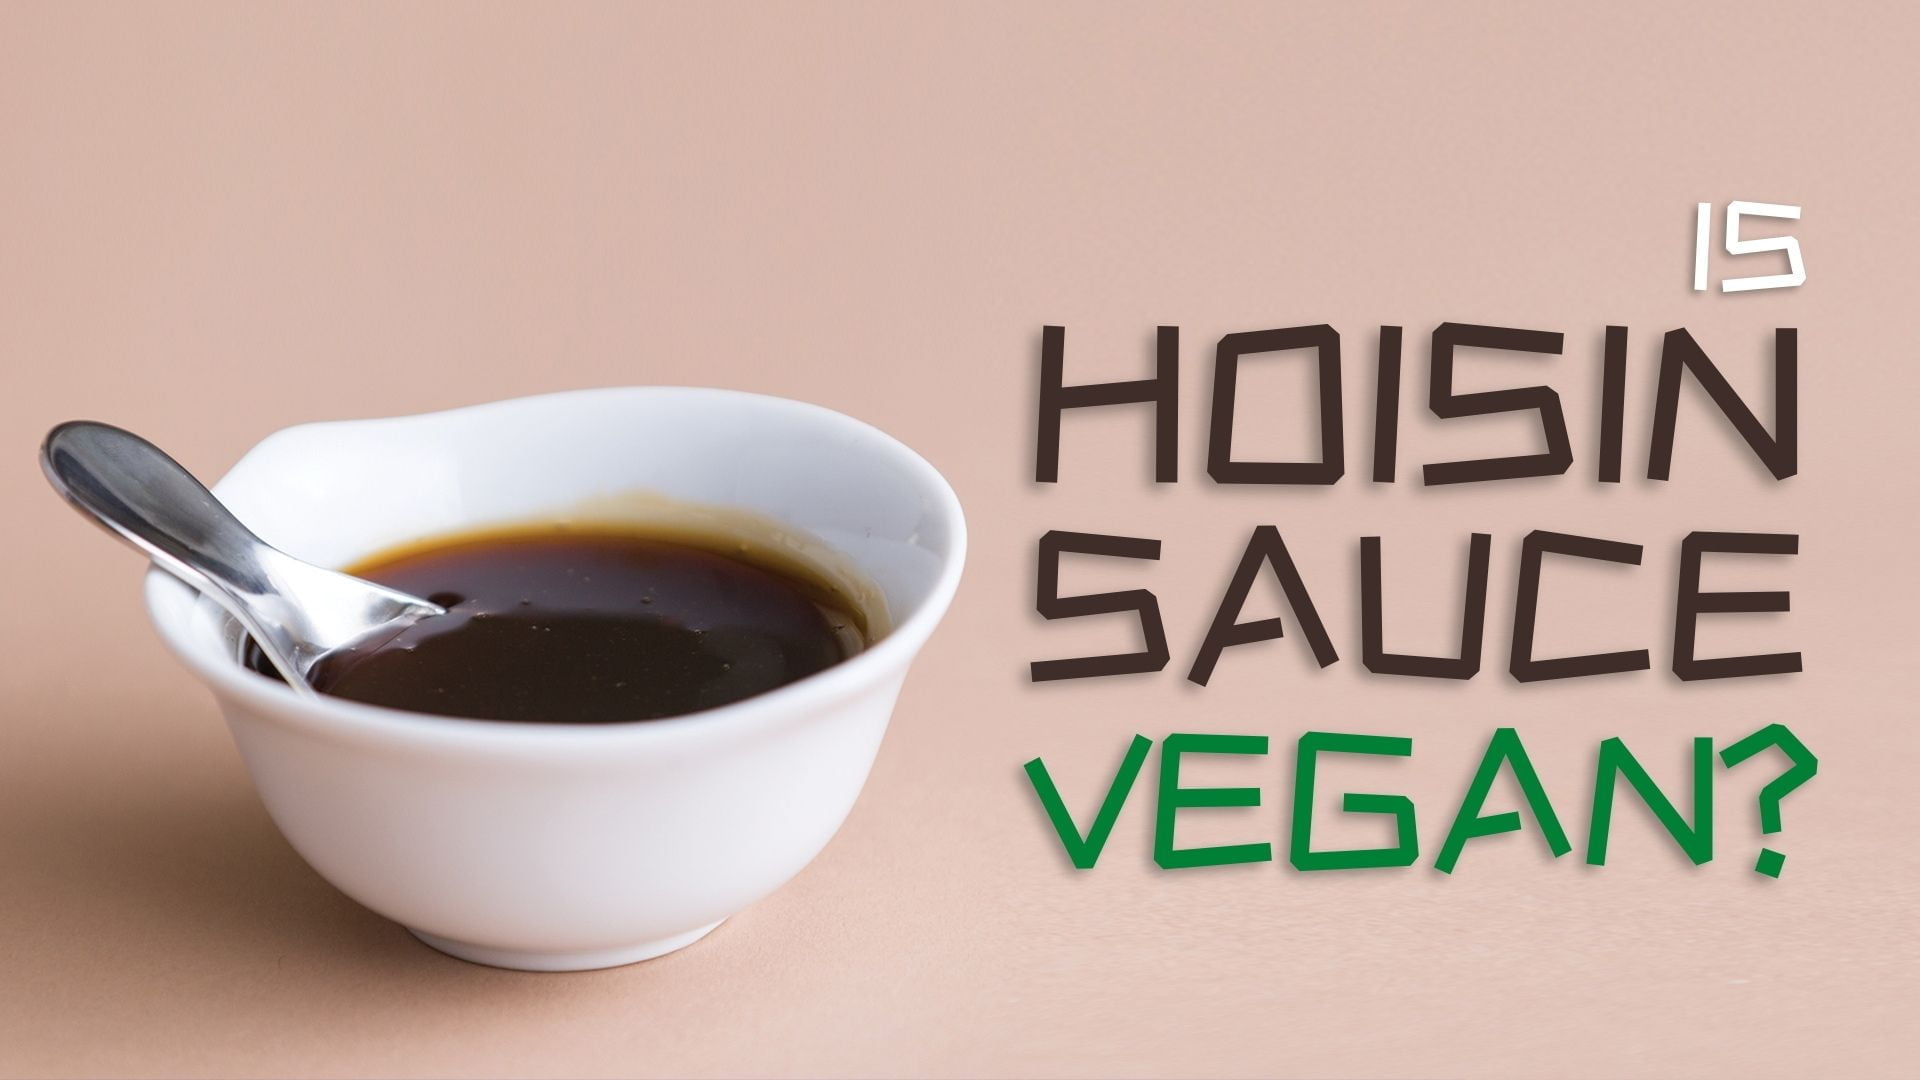 Is Hoisin Sauce Vegan